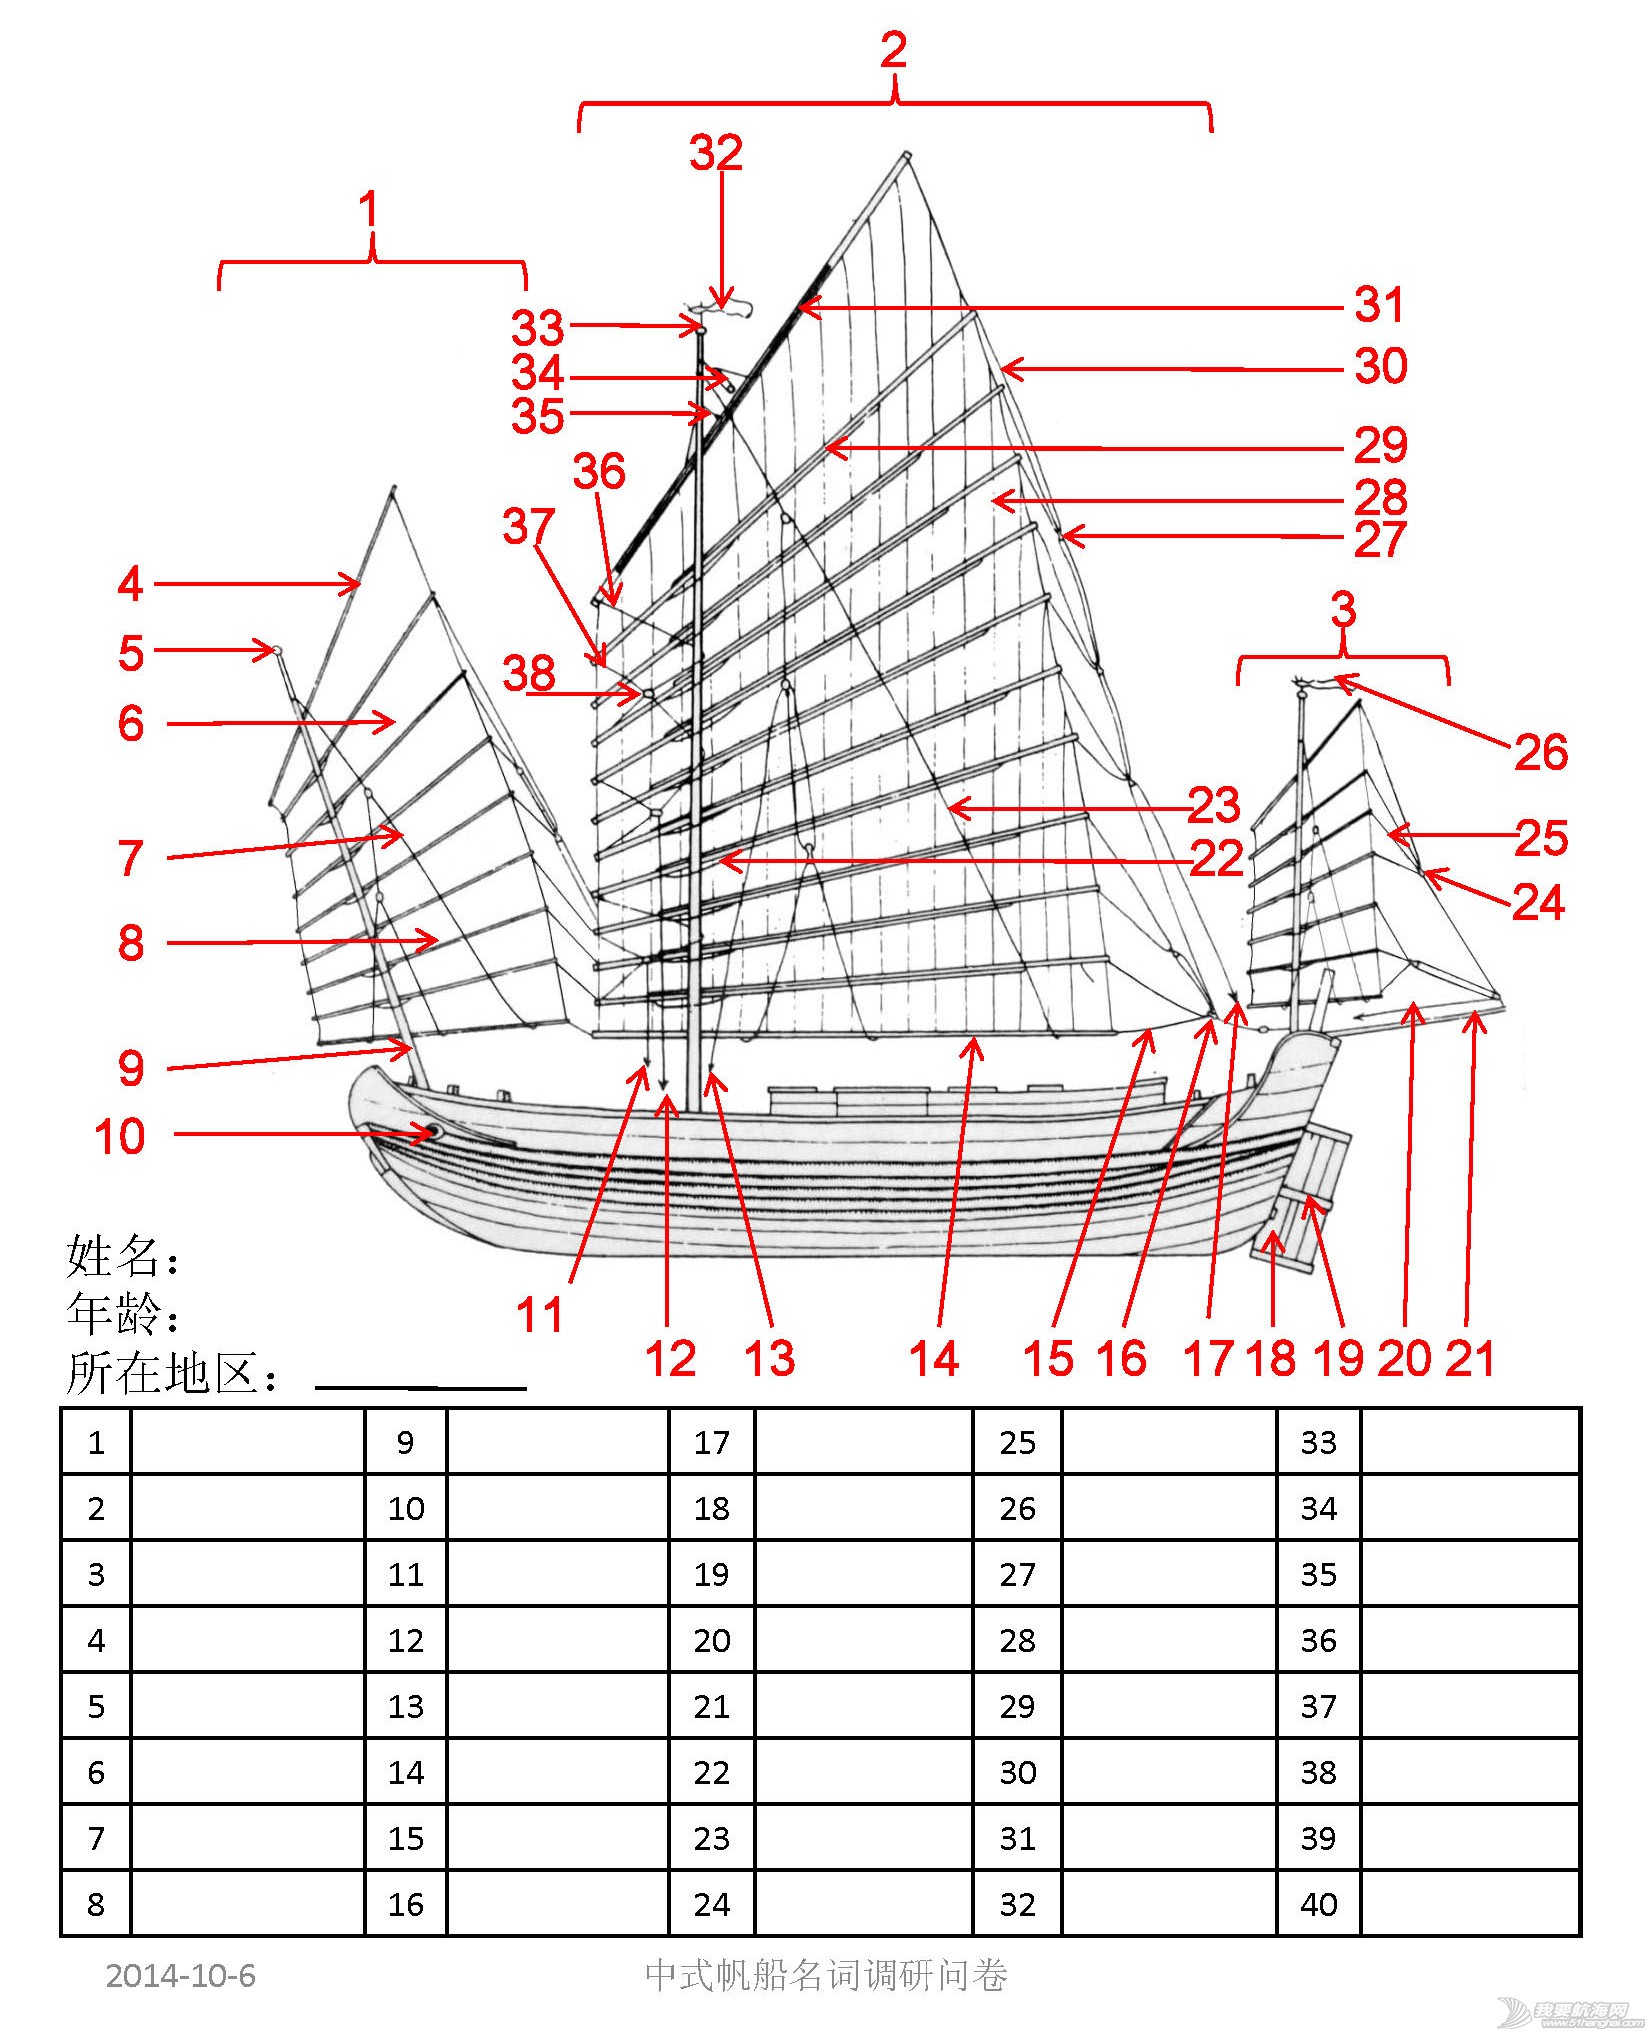 中式帆船名称问卷2_Page_1_Page_1.jpg